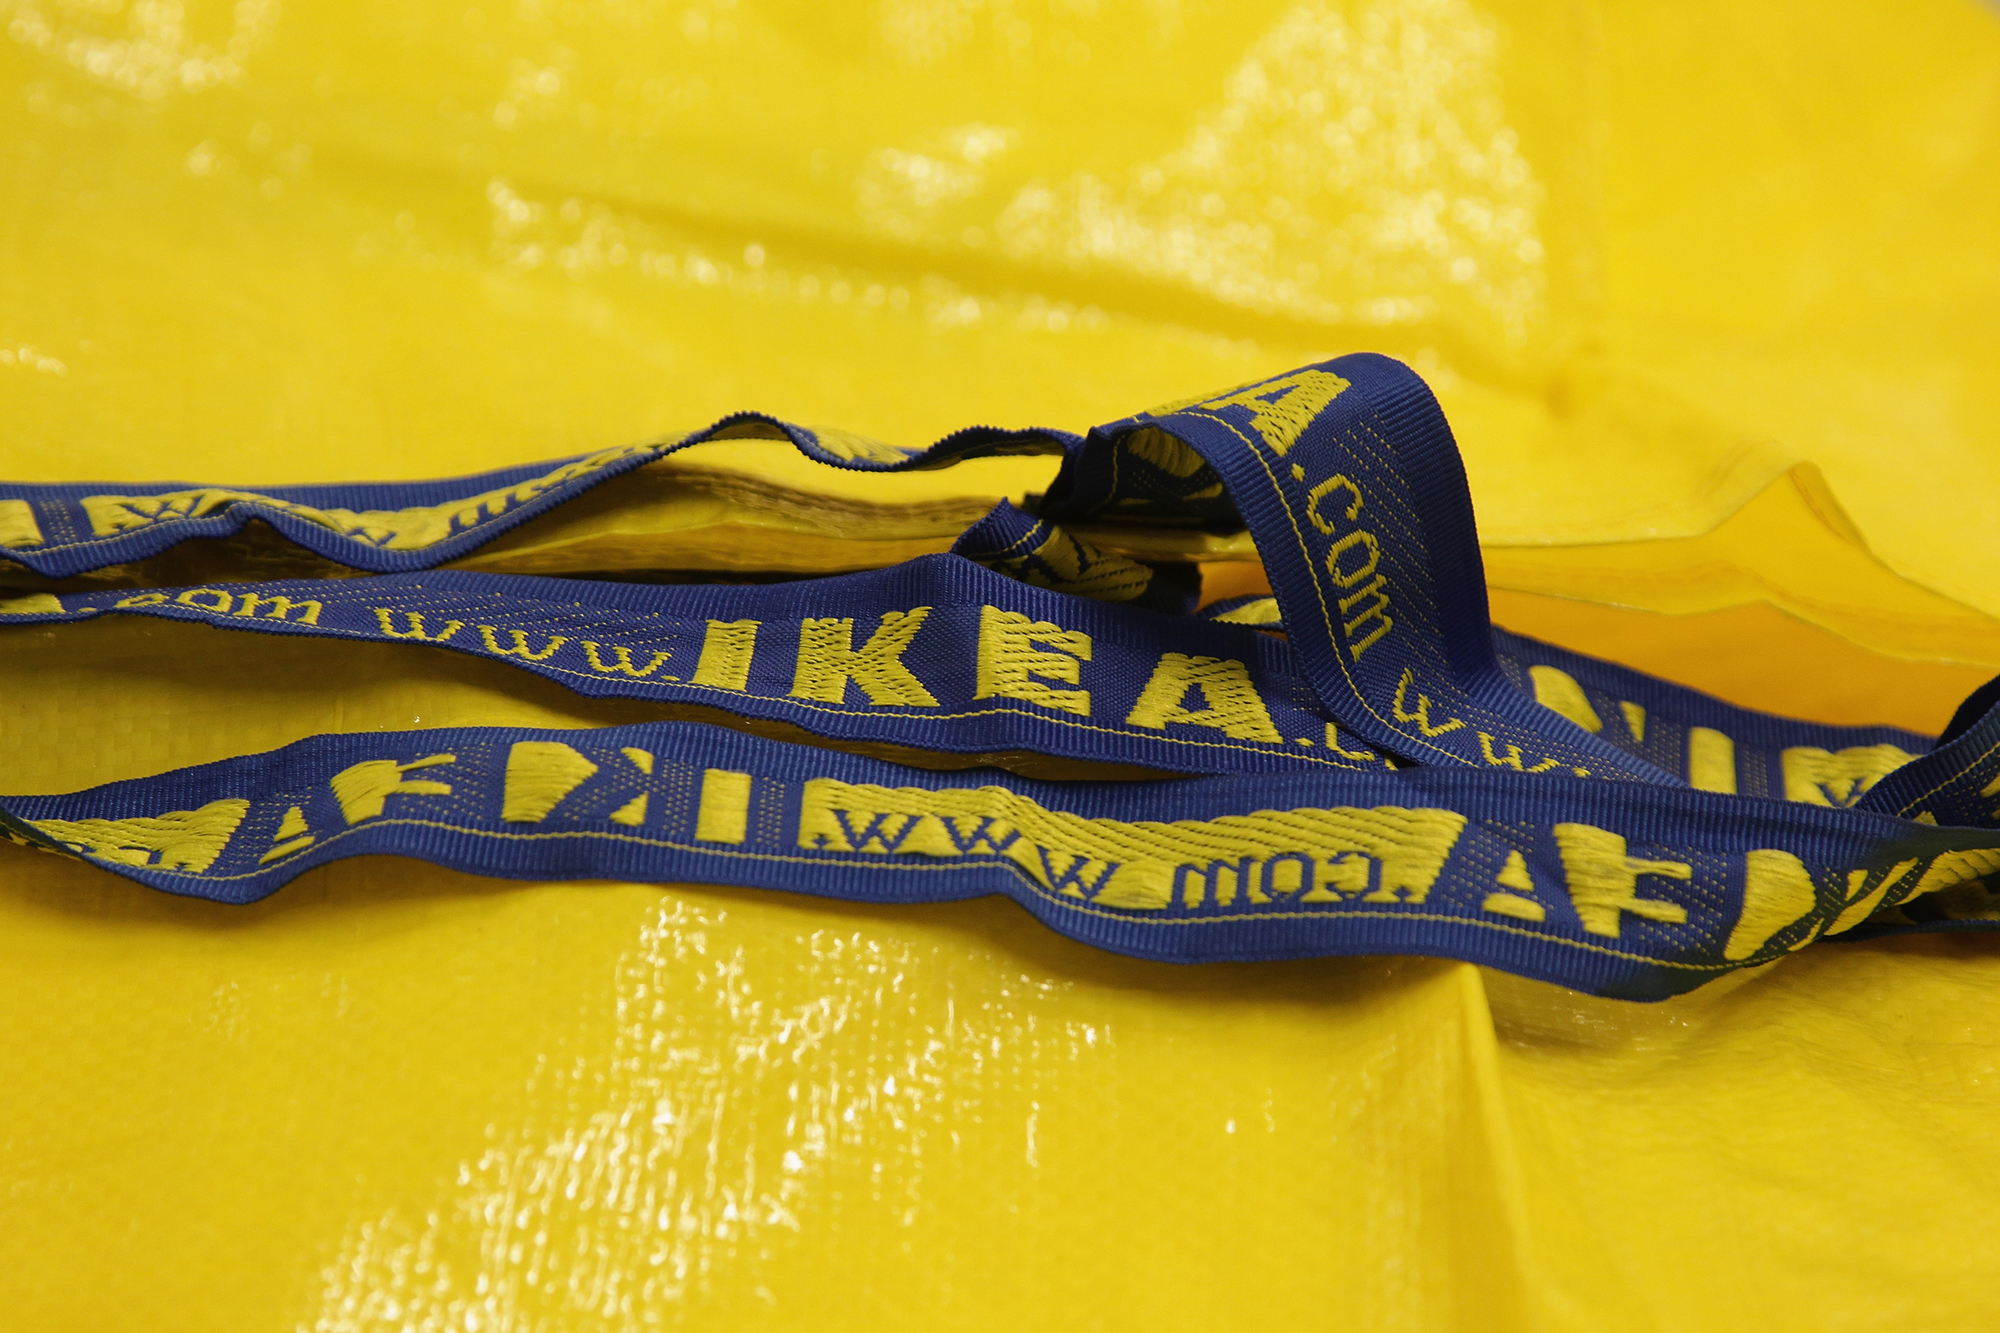 Ikea Shopping Bag Fashion: Virgil Abloh Off-White Design